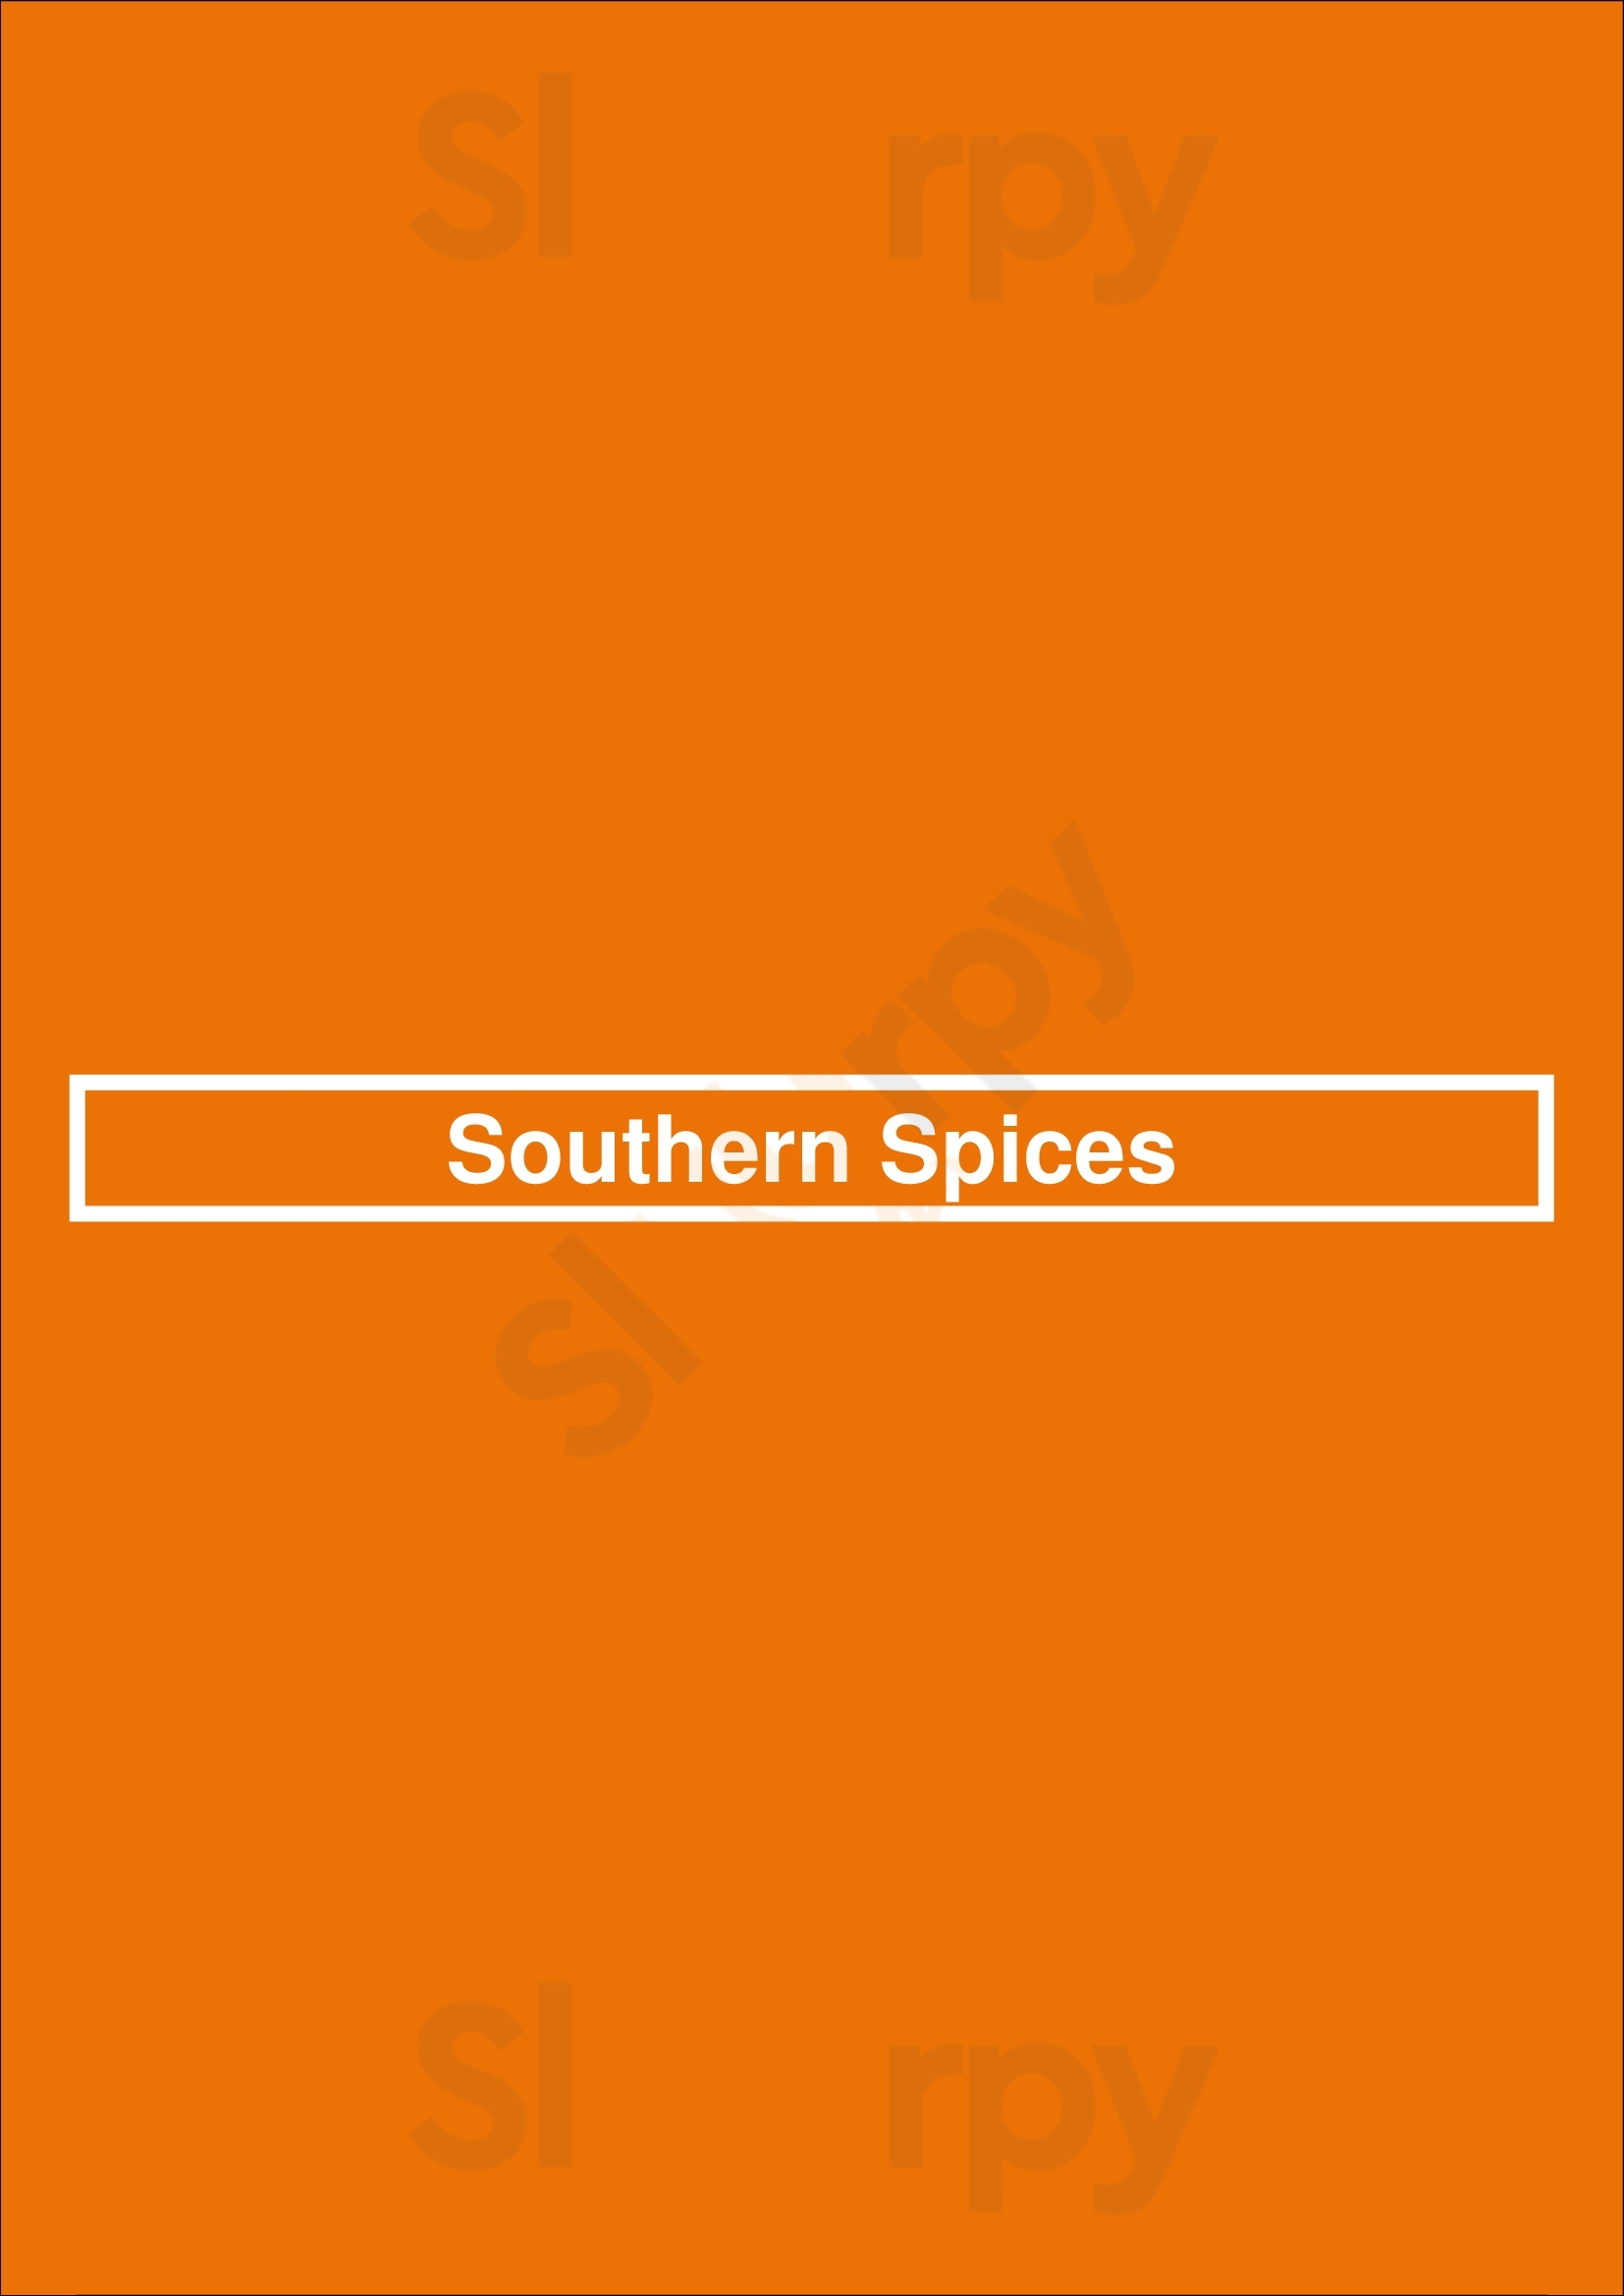 Southern Spices Winnipeg Menu - 1